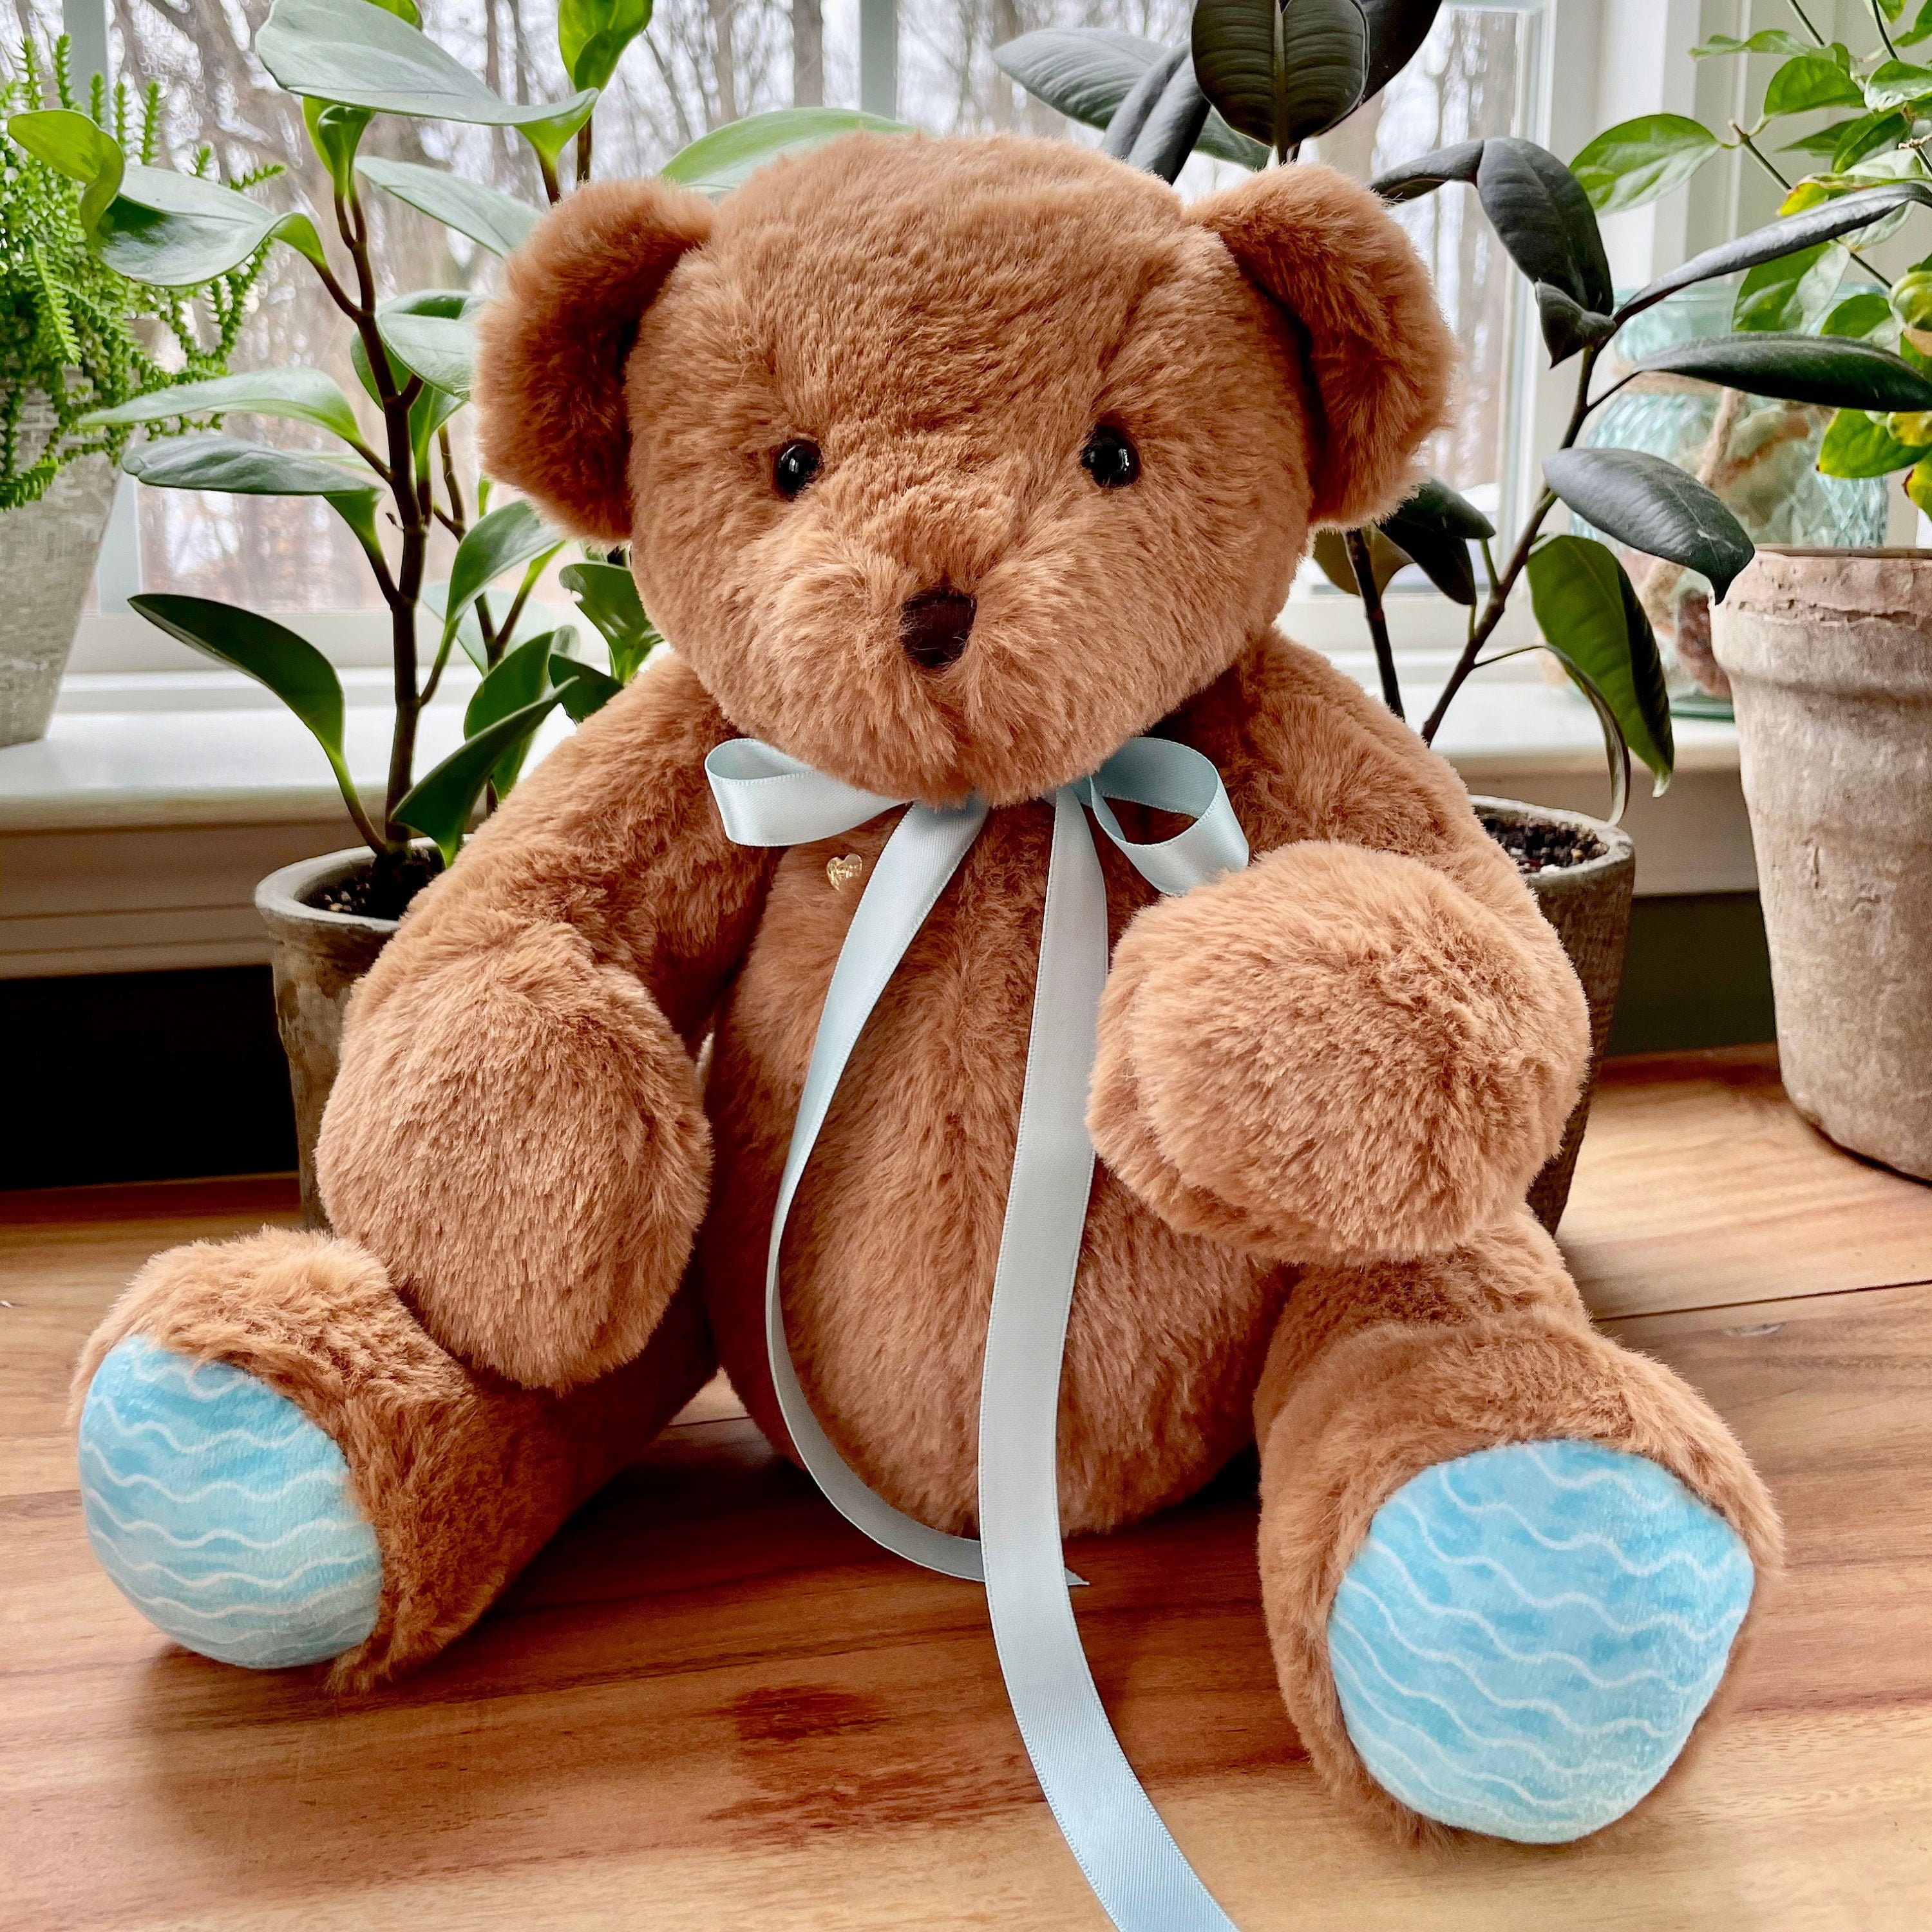 Take Your Pain Bear Get Well Sick Gift: 8 inch Brown Teddy Bear Stuffed Animal